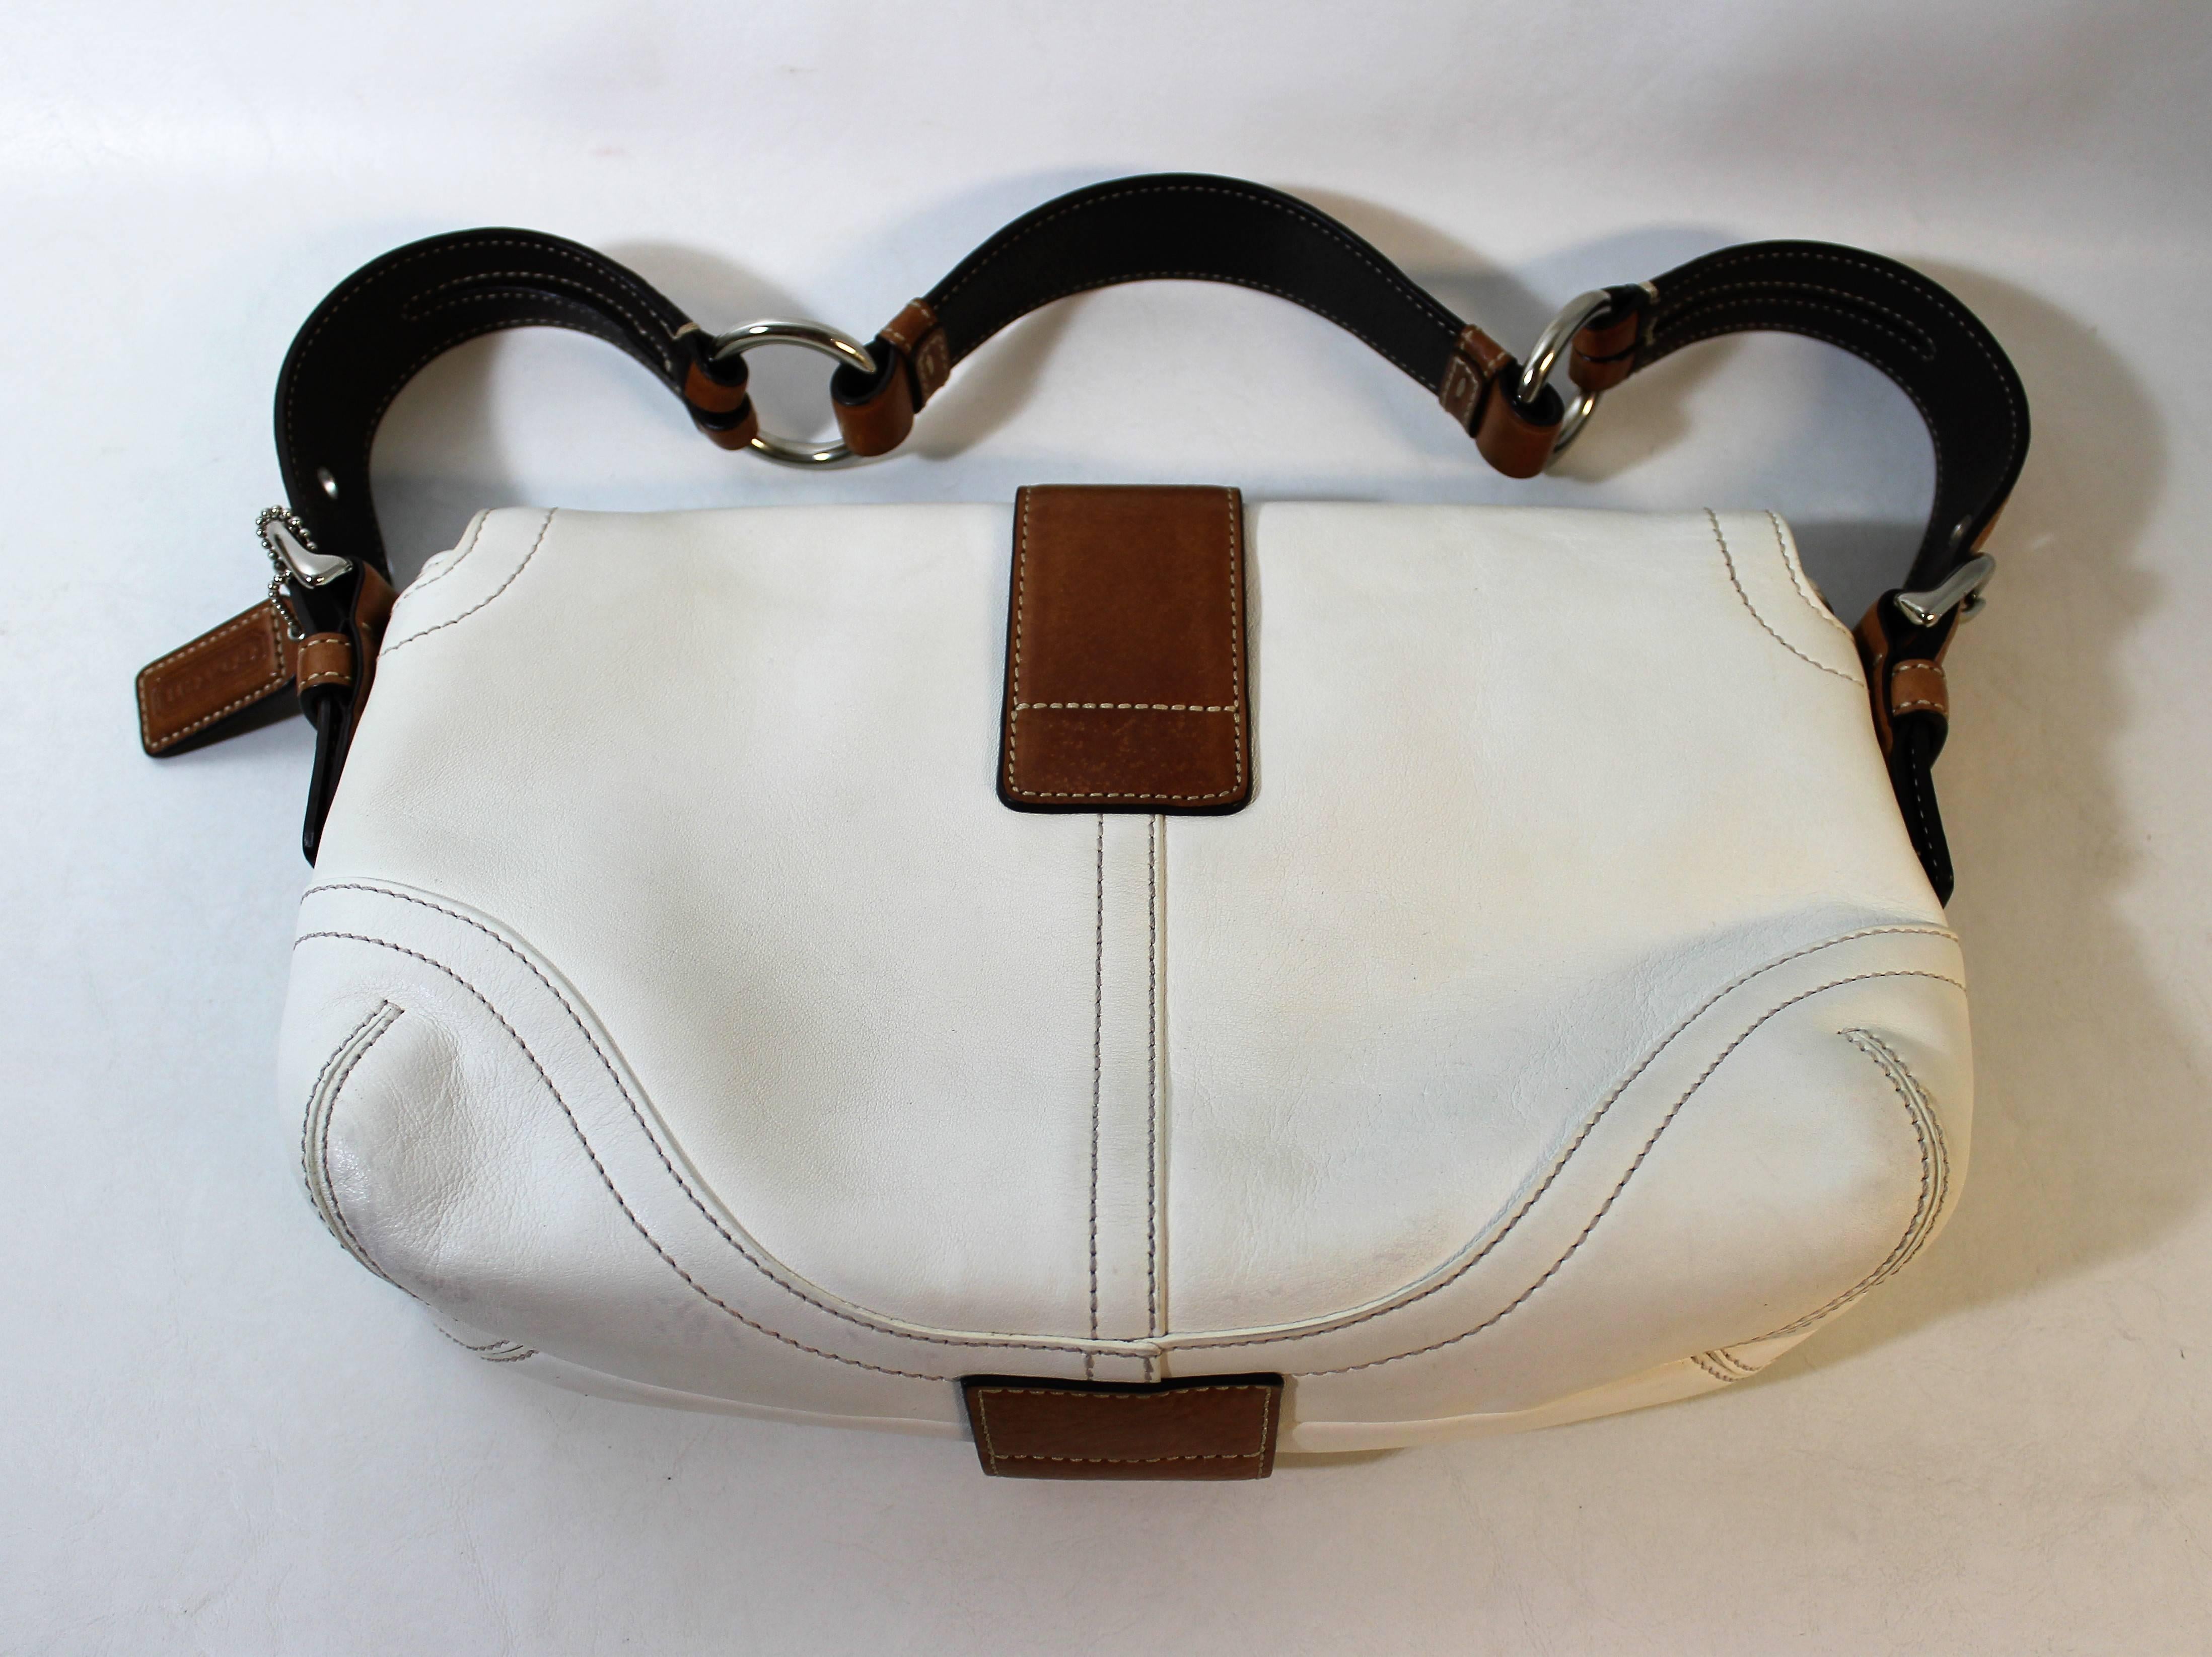 Leather coach handbag or purse.